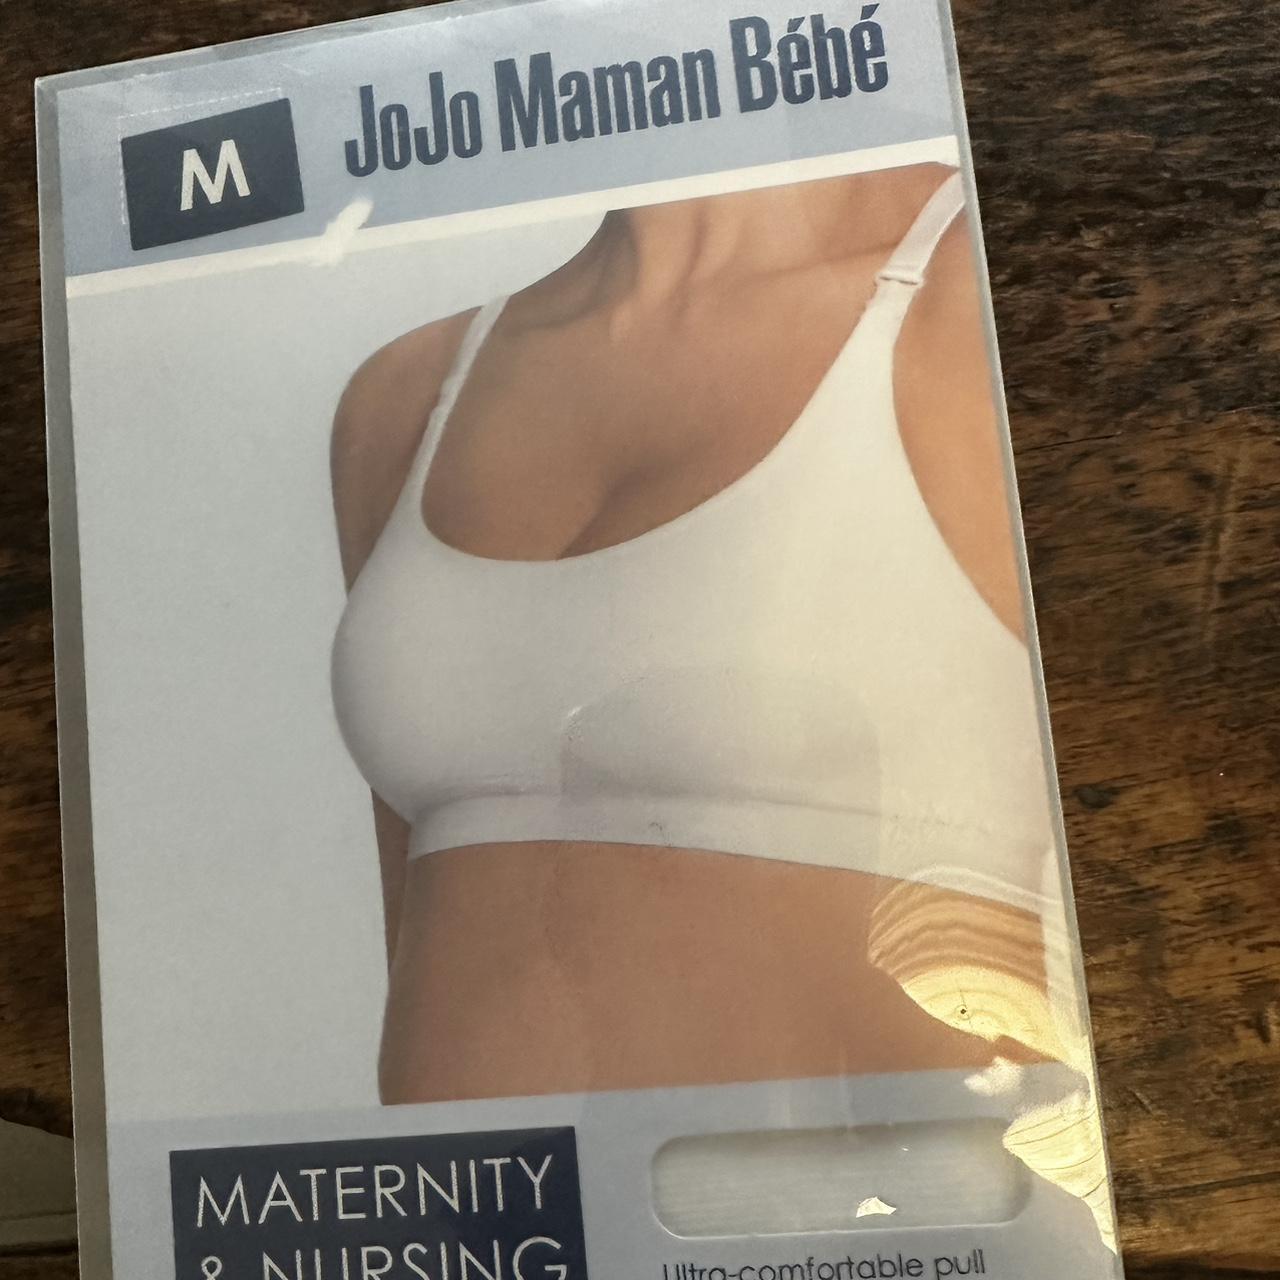 Jojo maman bebe brand new maternity bra size M. - Depop